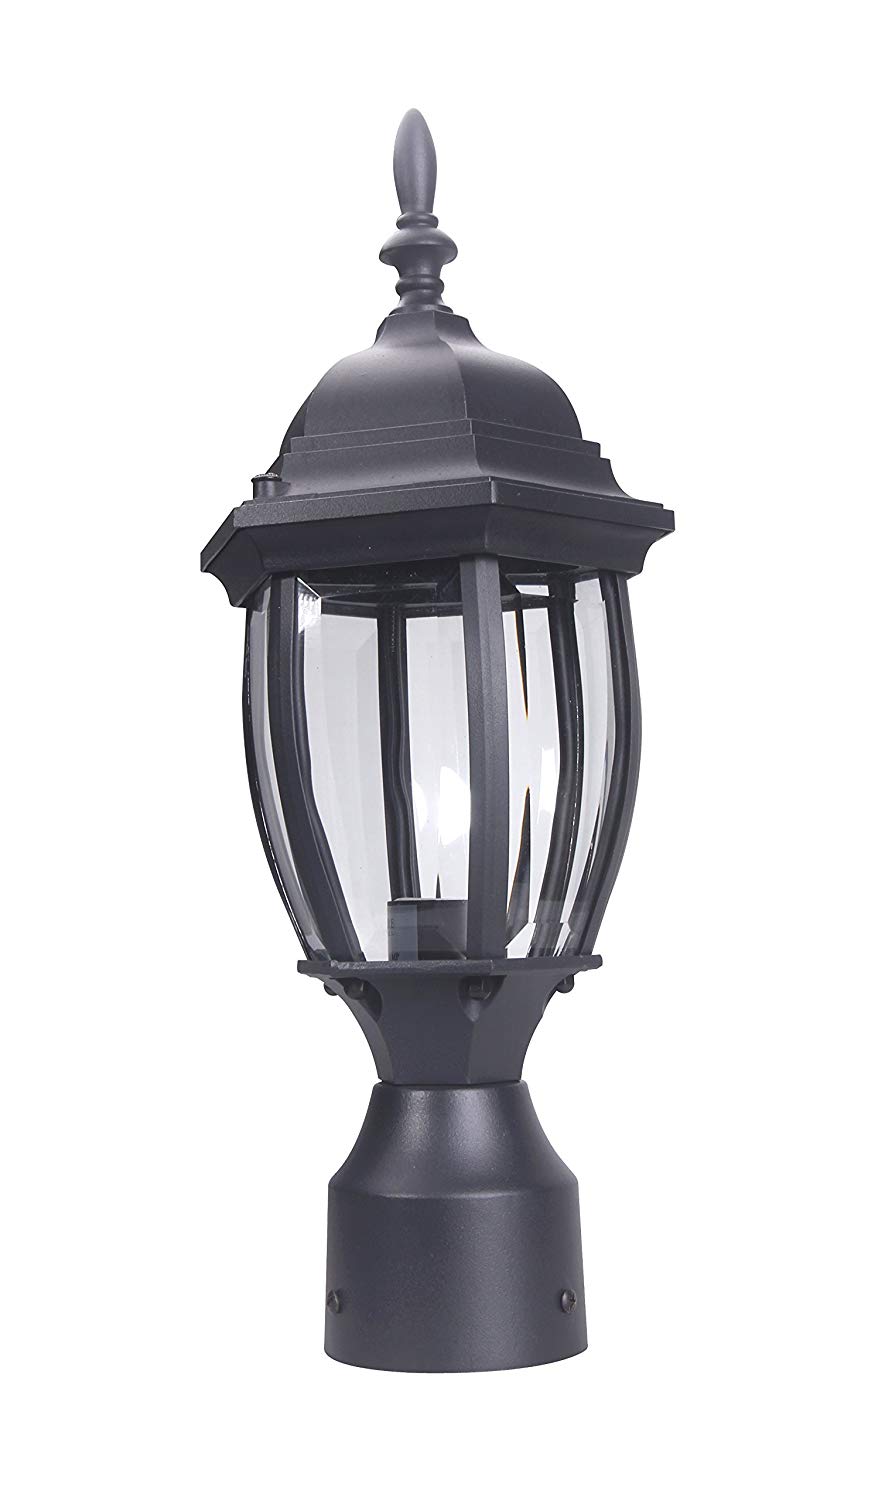 LIT-PaTH Outdoor Post Light Pole Lantern Lighting Fixture with One E26 Base Max 100W, Aluminum Housing Plus Glass, Matte Black Finish 